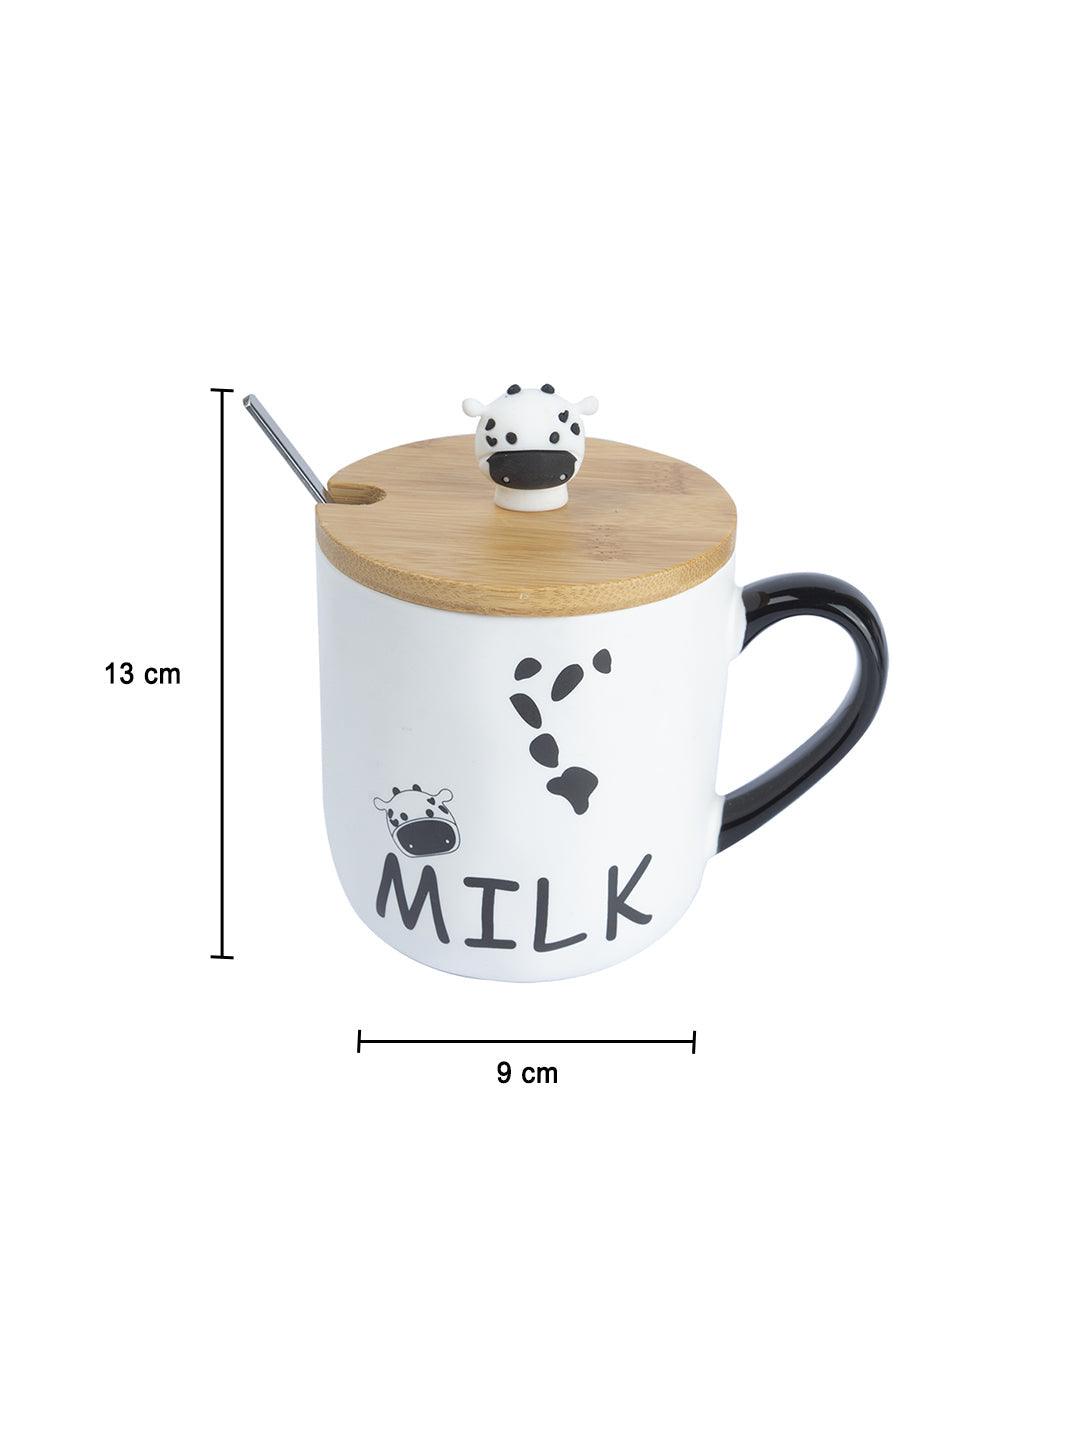 "MILK" Coffee Mug With Lid -  450mL, Long Stirring Spoon